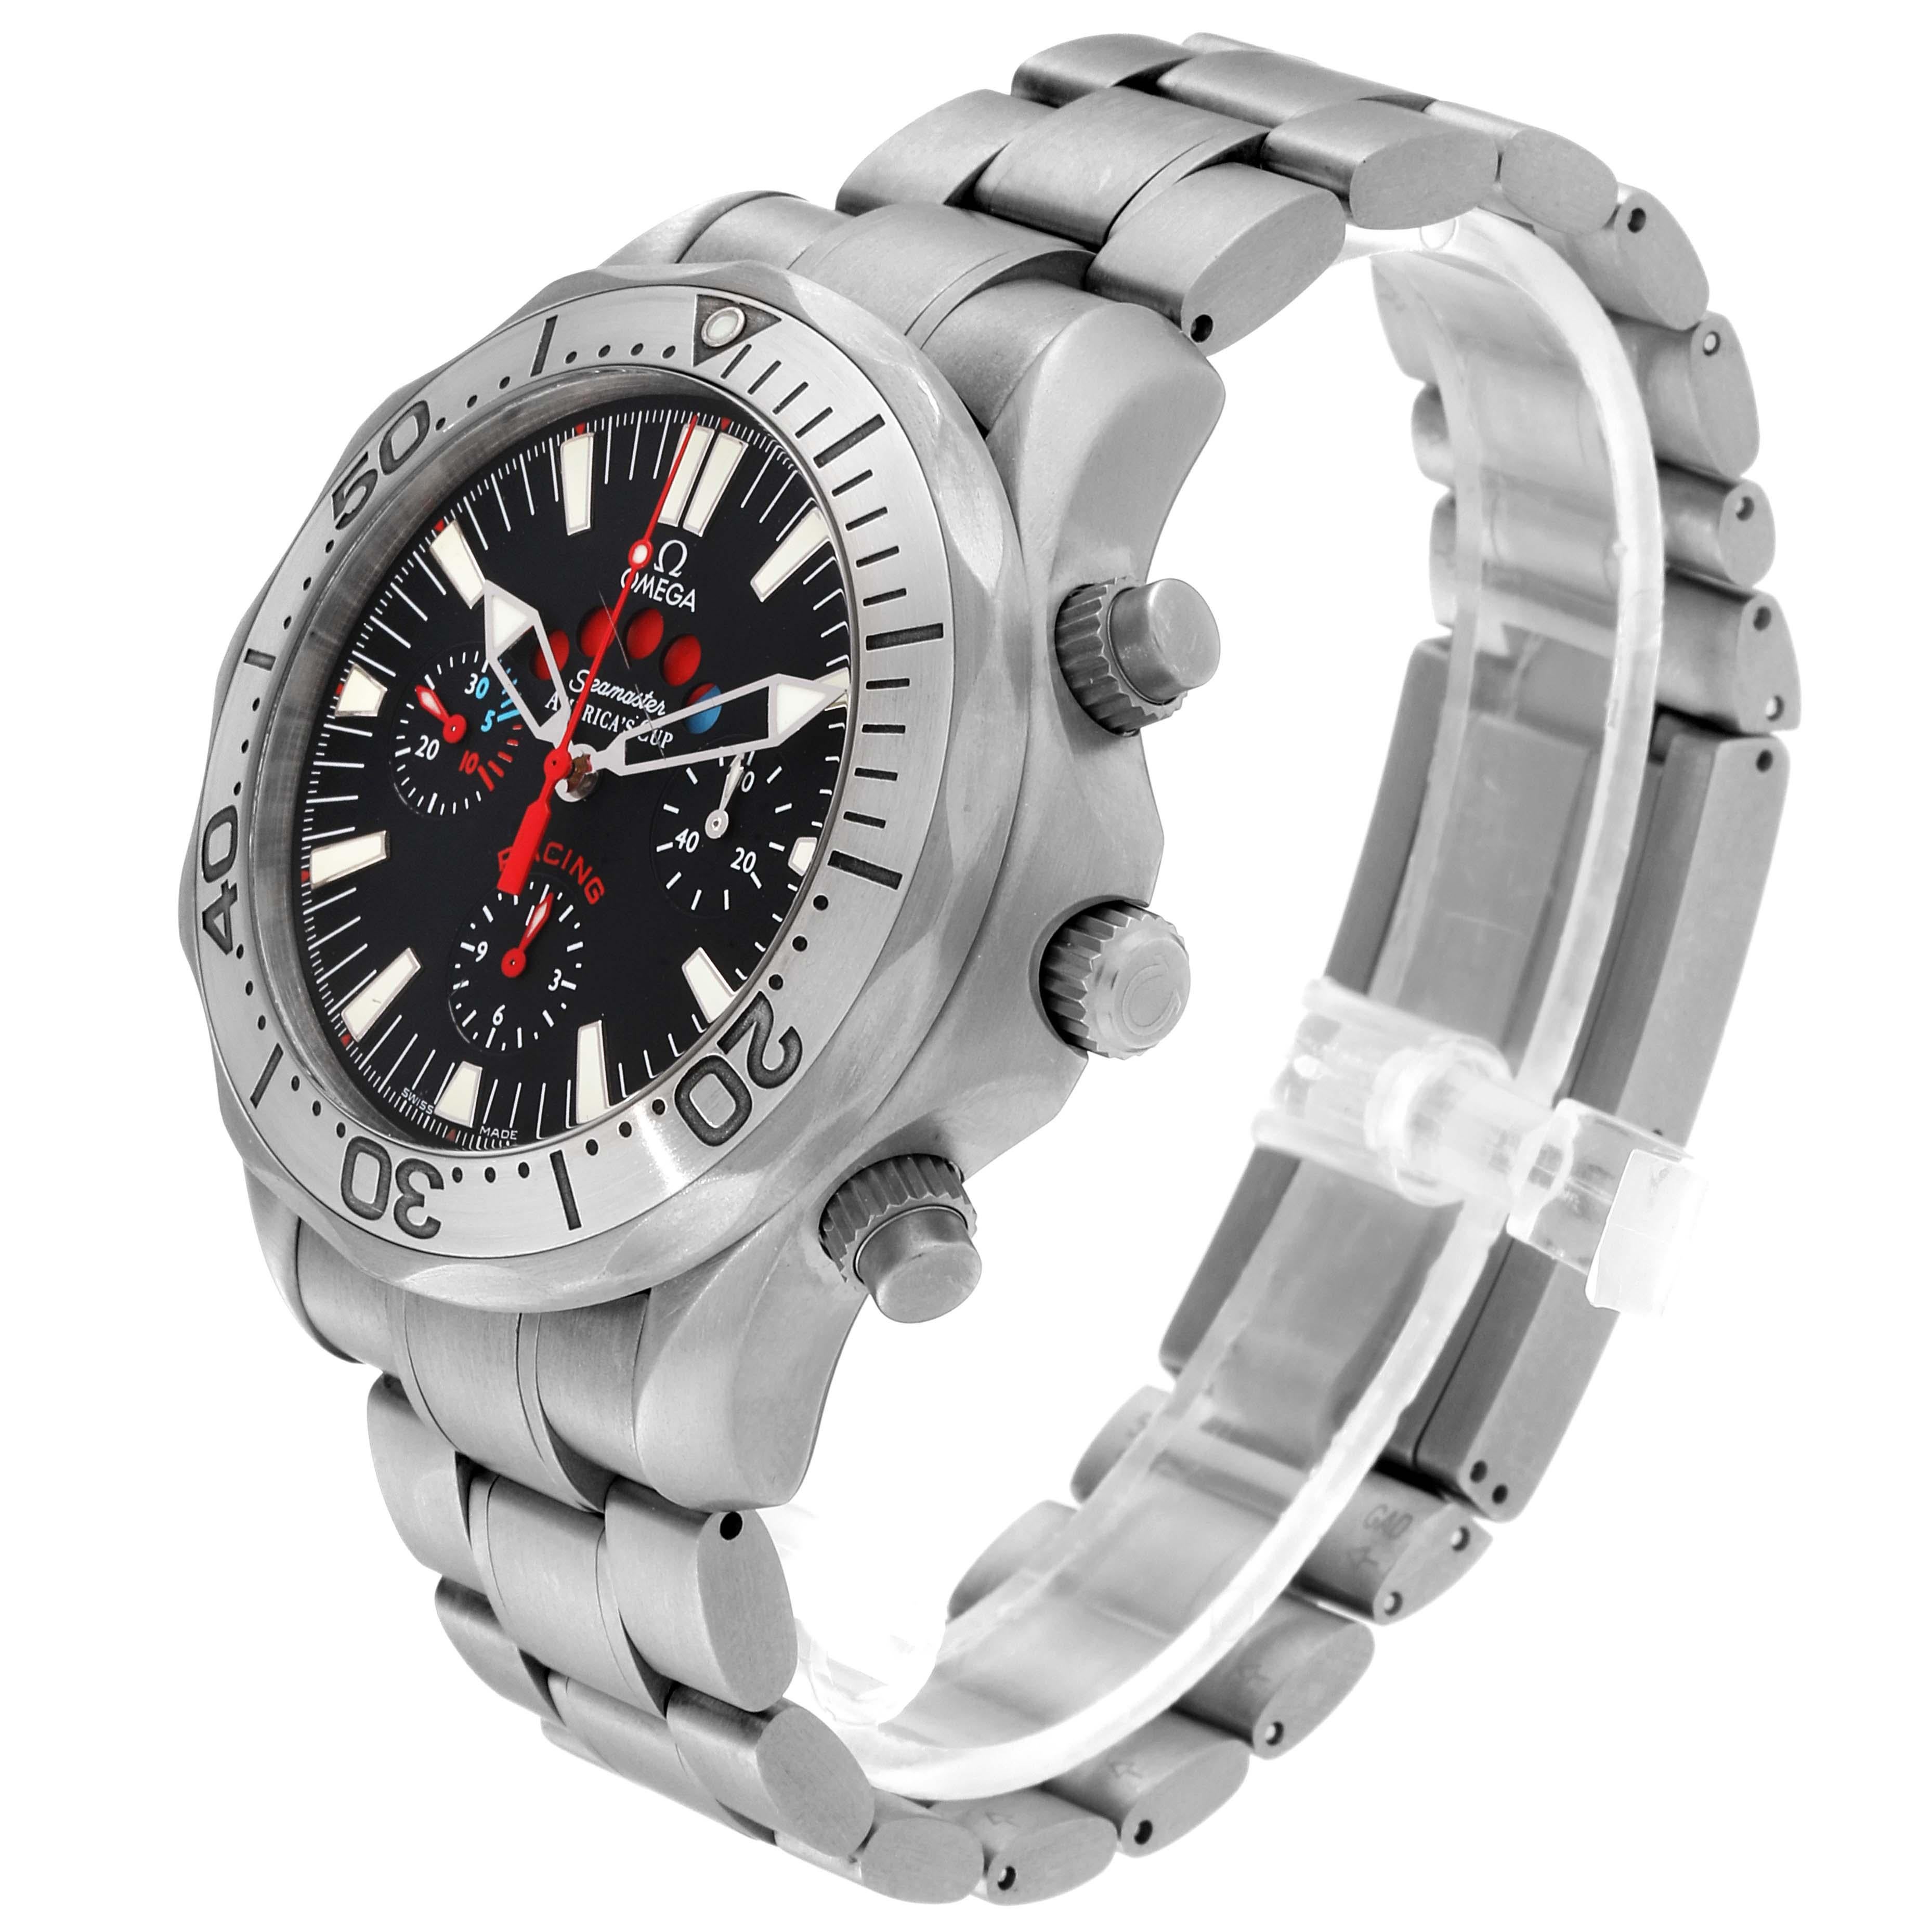 Omega Seamaster Regatta Racing Titanium Men's Watch 2269.52.00 For Sale 1